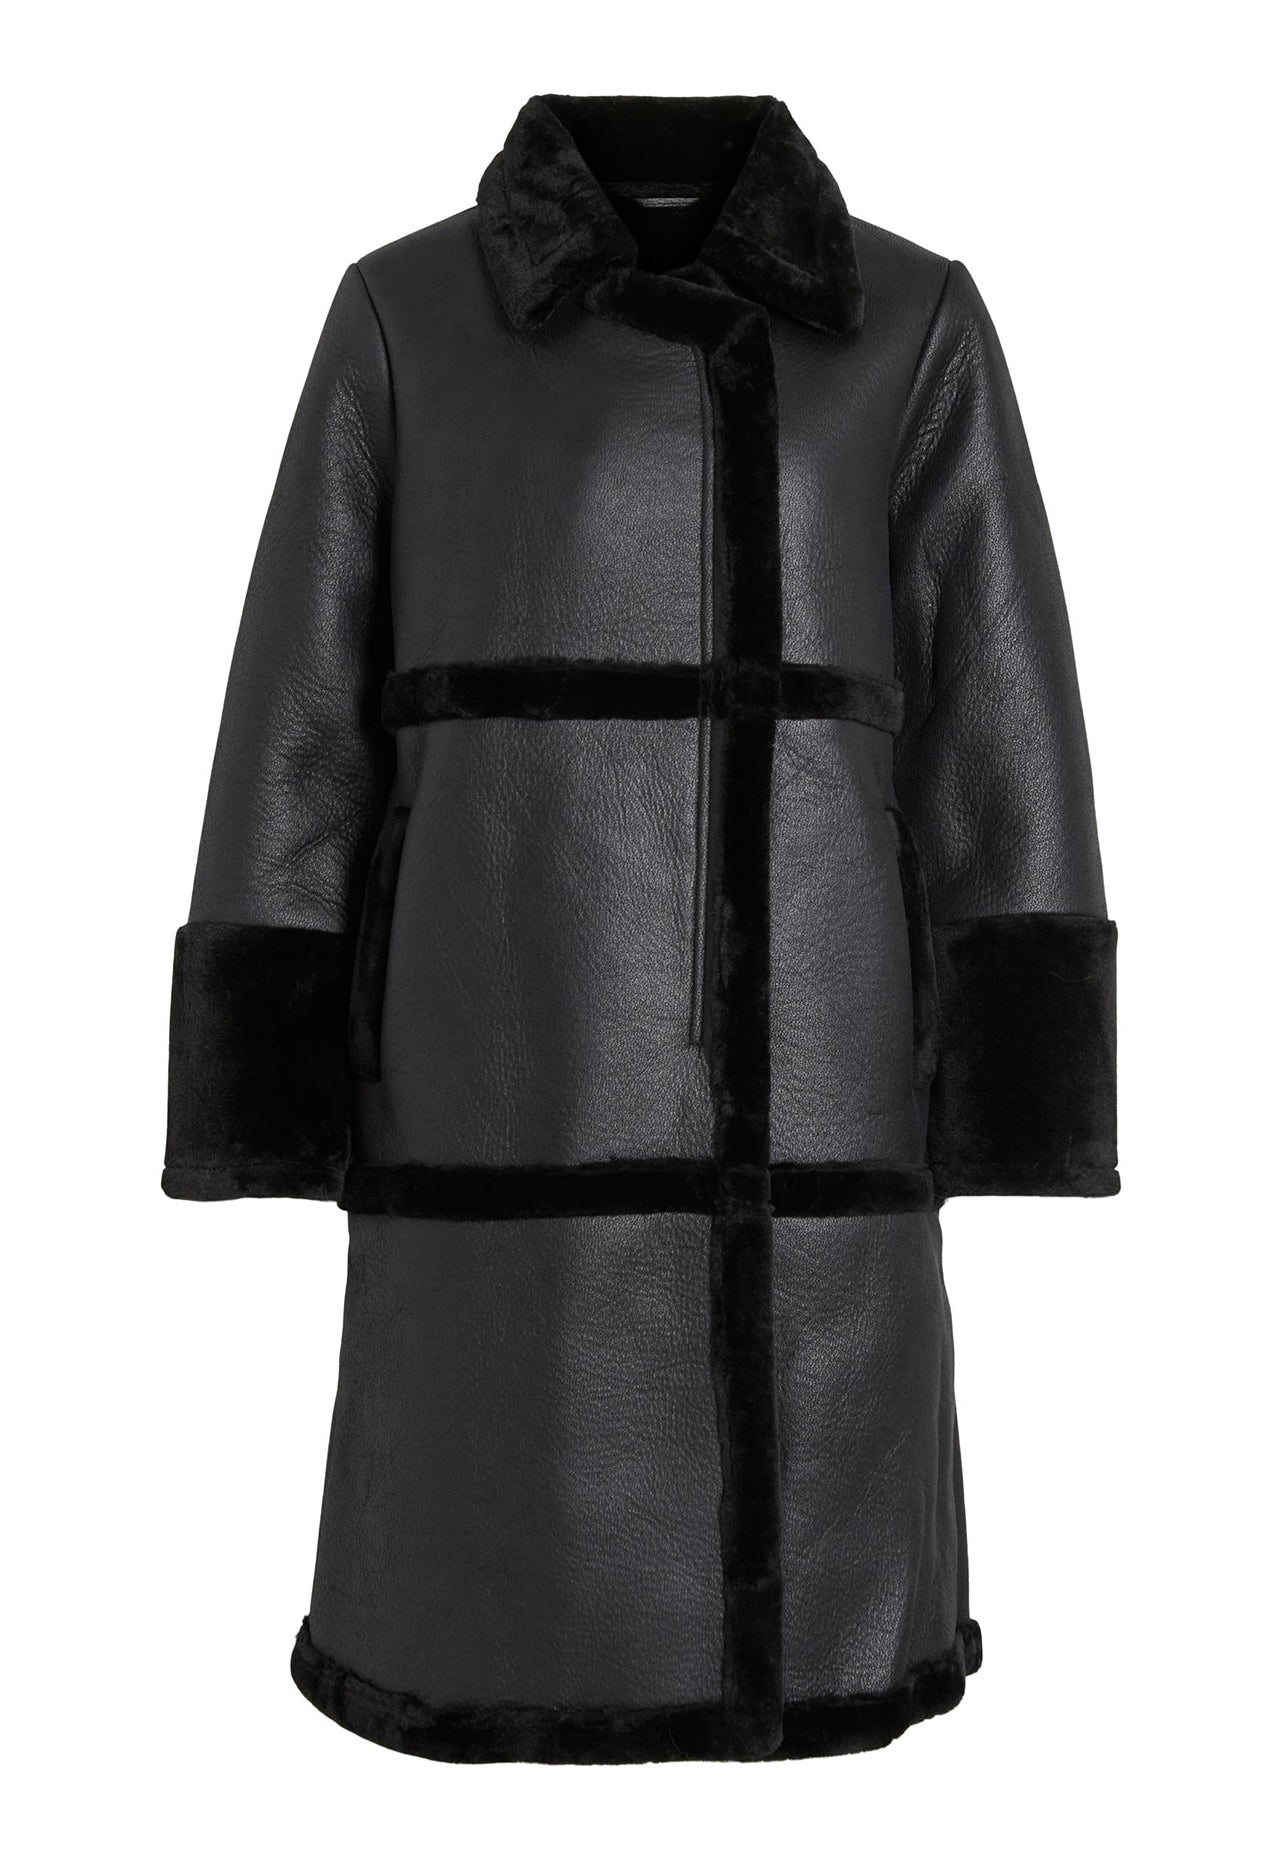 VILA Long Melda Faux Leather & Shearling Aviator Coat in Black - One Nation Clothing